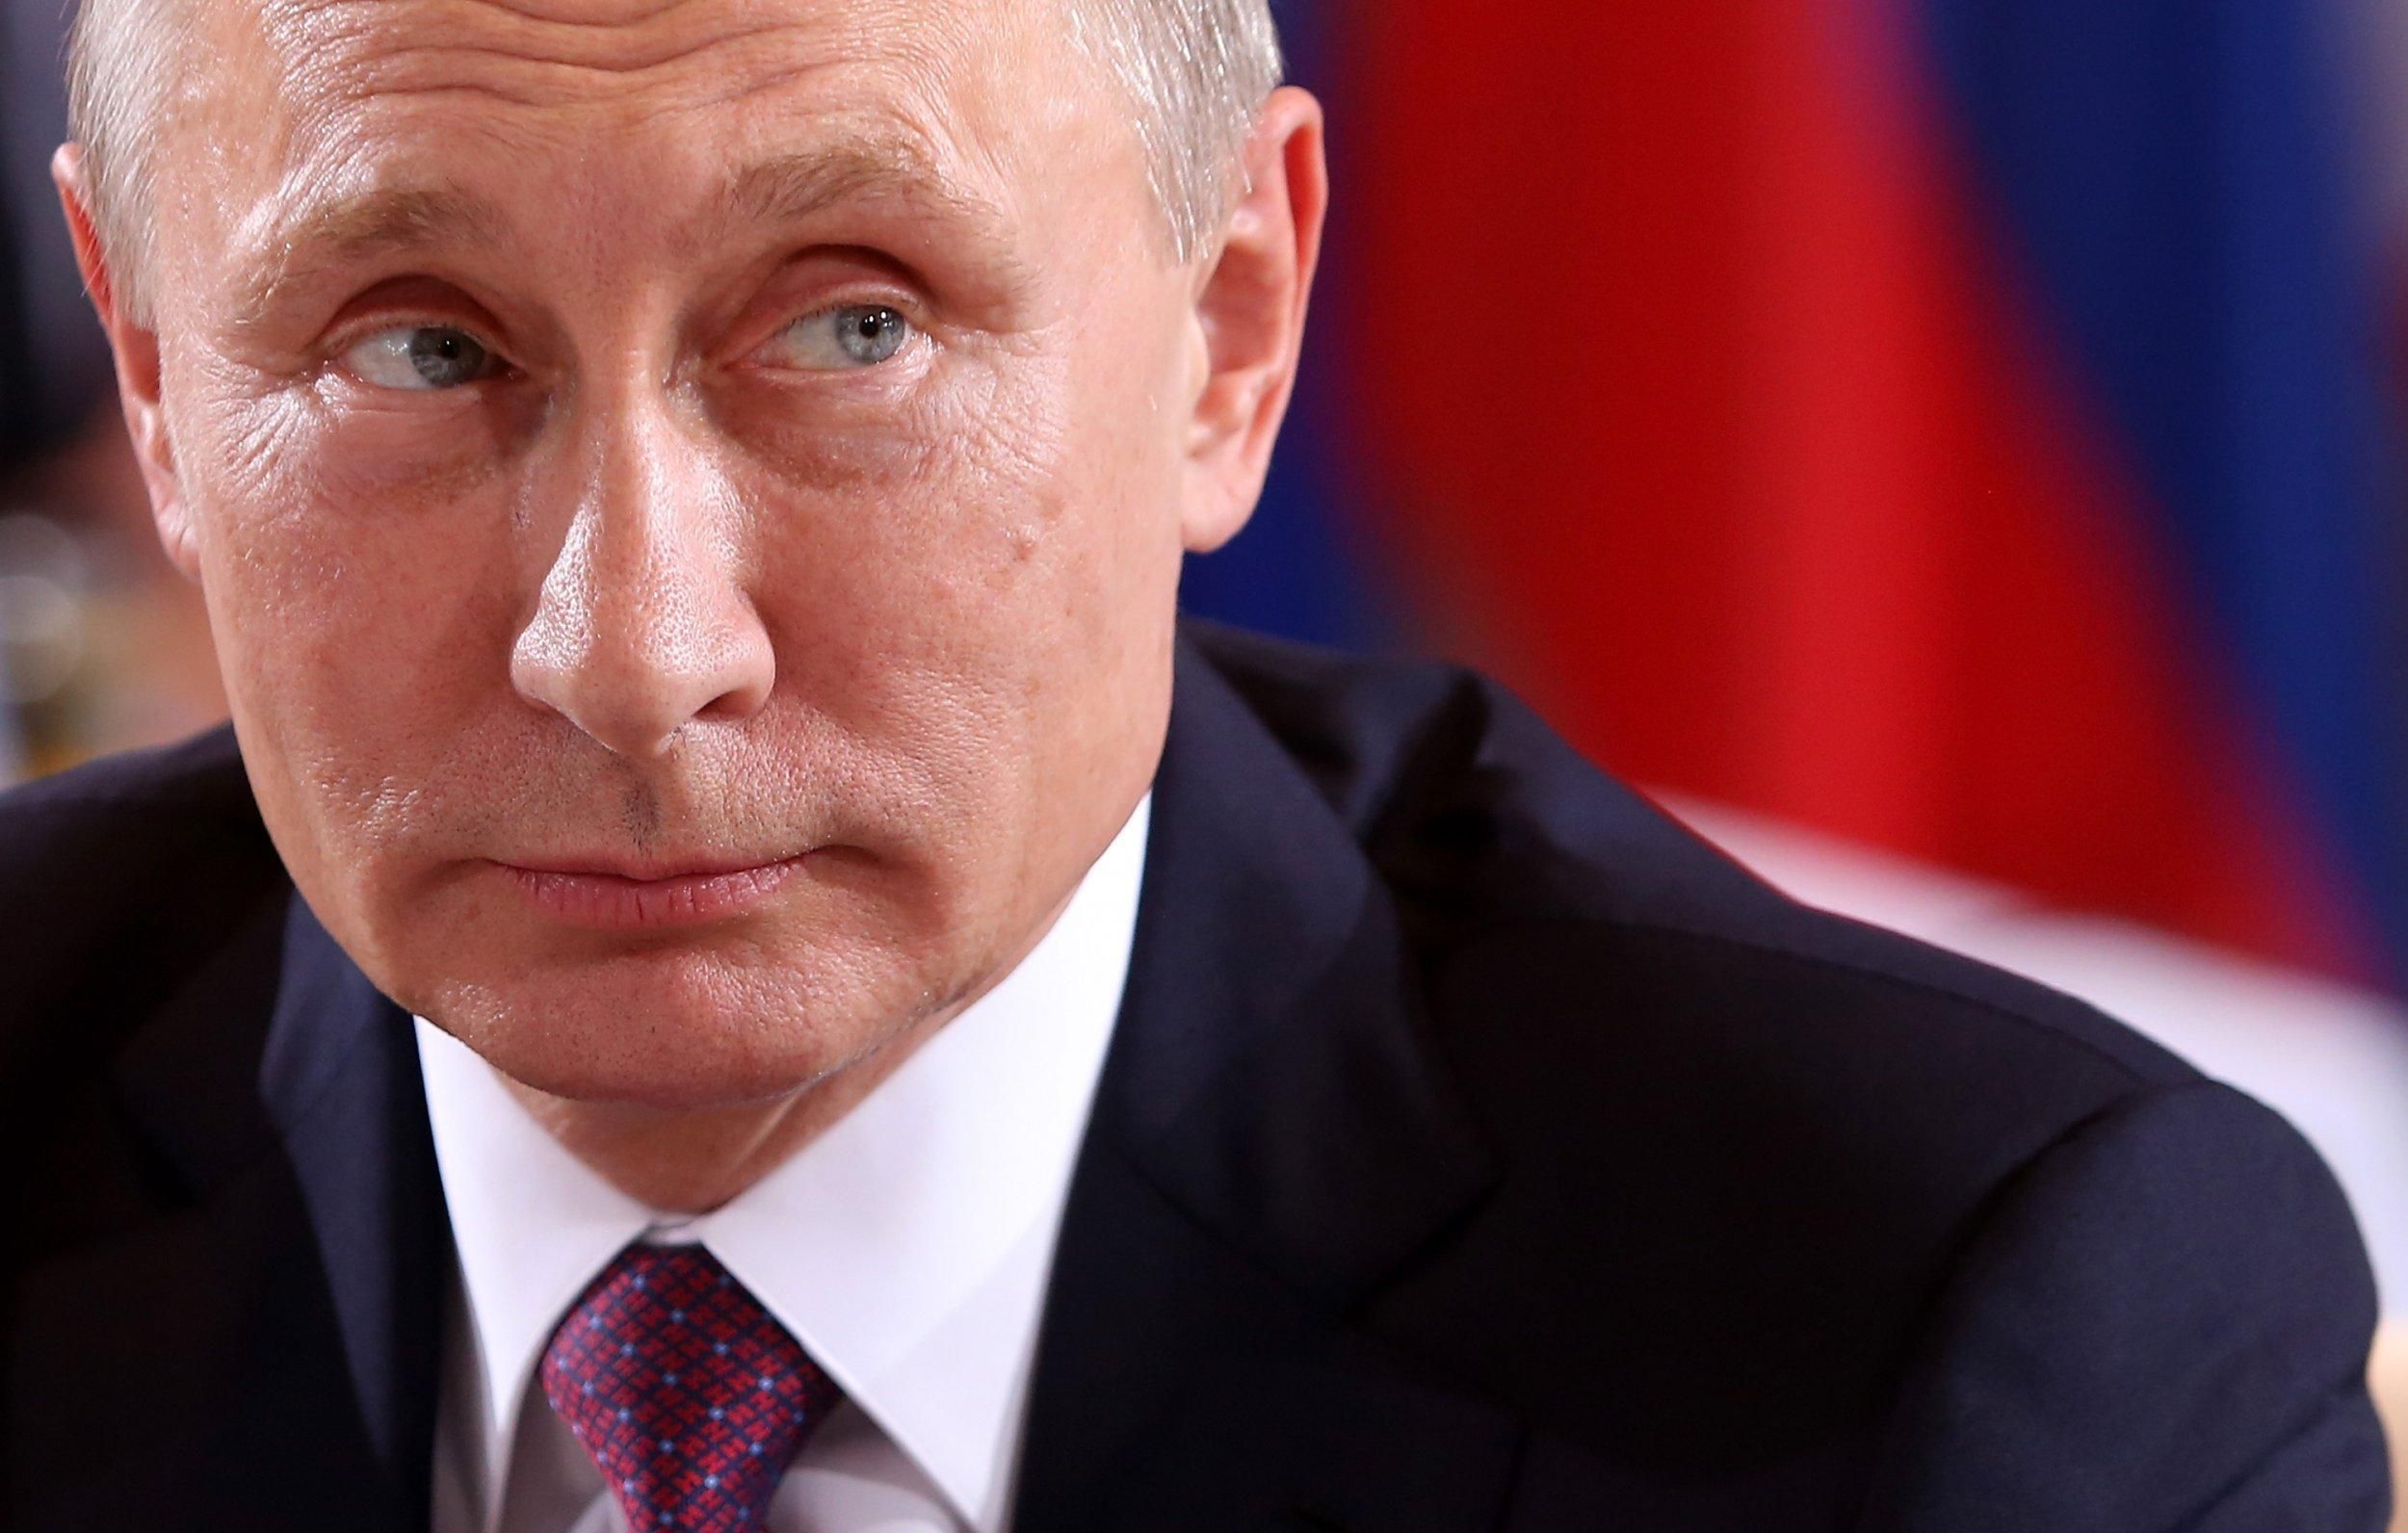 Путин решил перевести расчеты за поставки газа в Европу в рубли